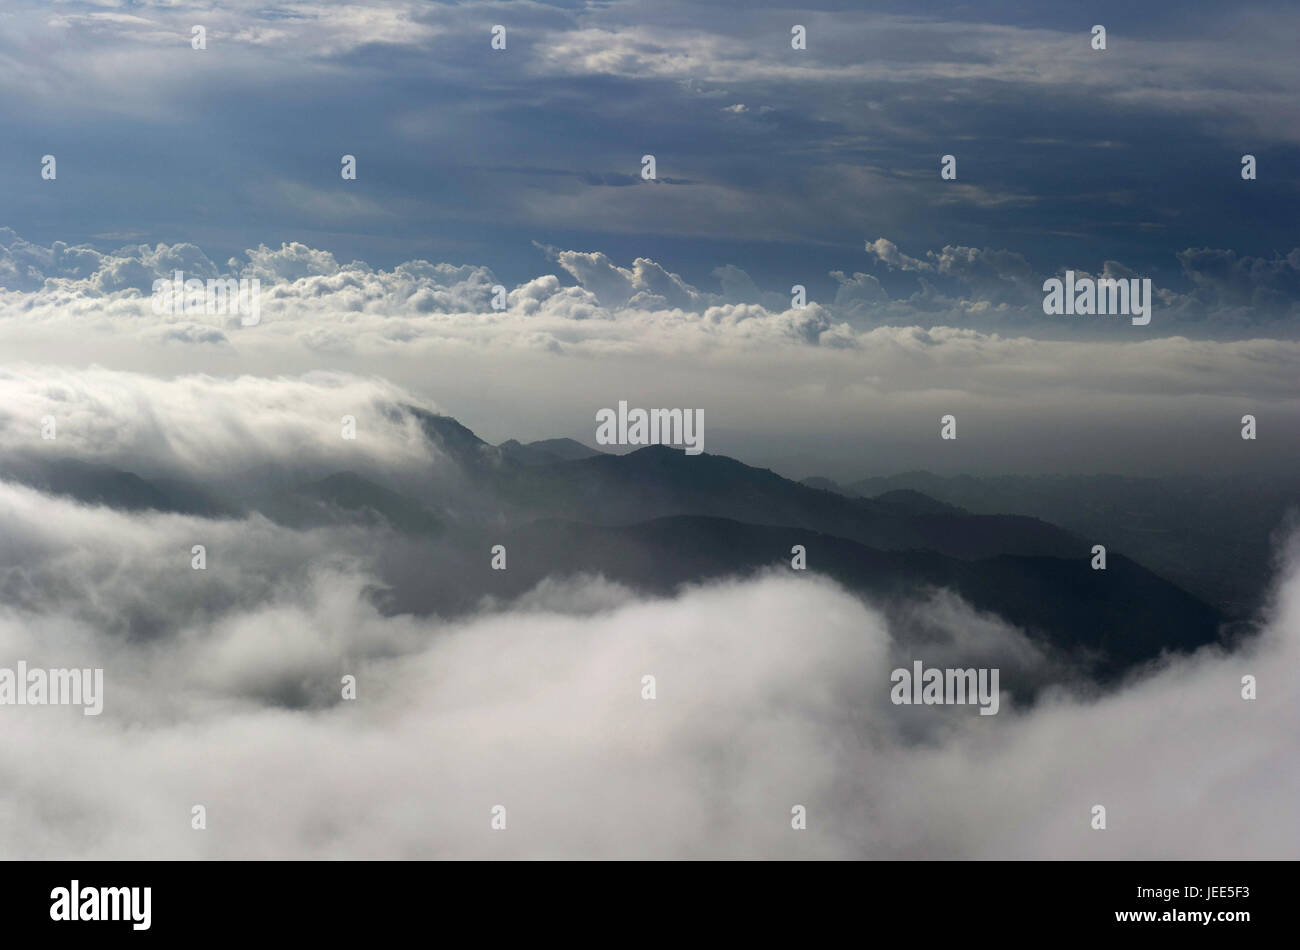 Spain, Catalonia, Montserrat, heaven with cloud formation, Stock Photo